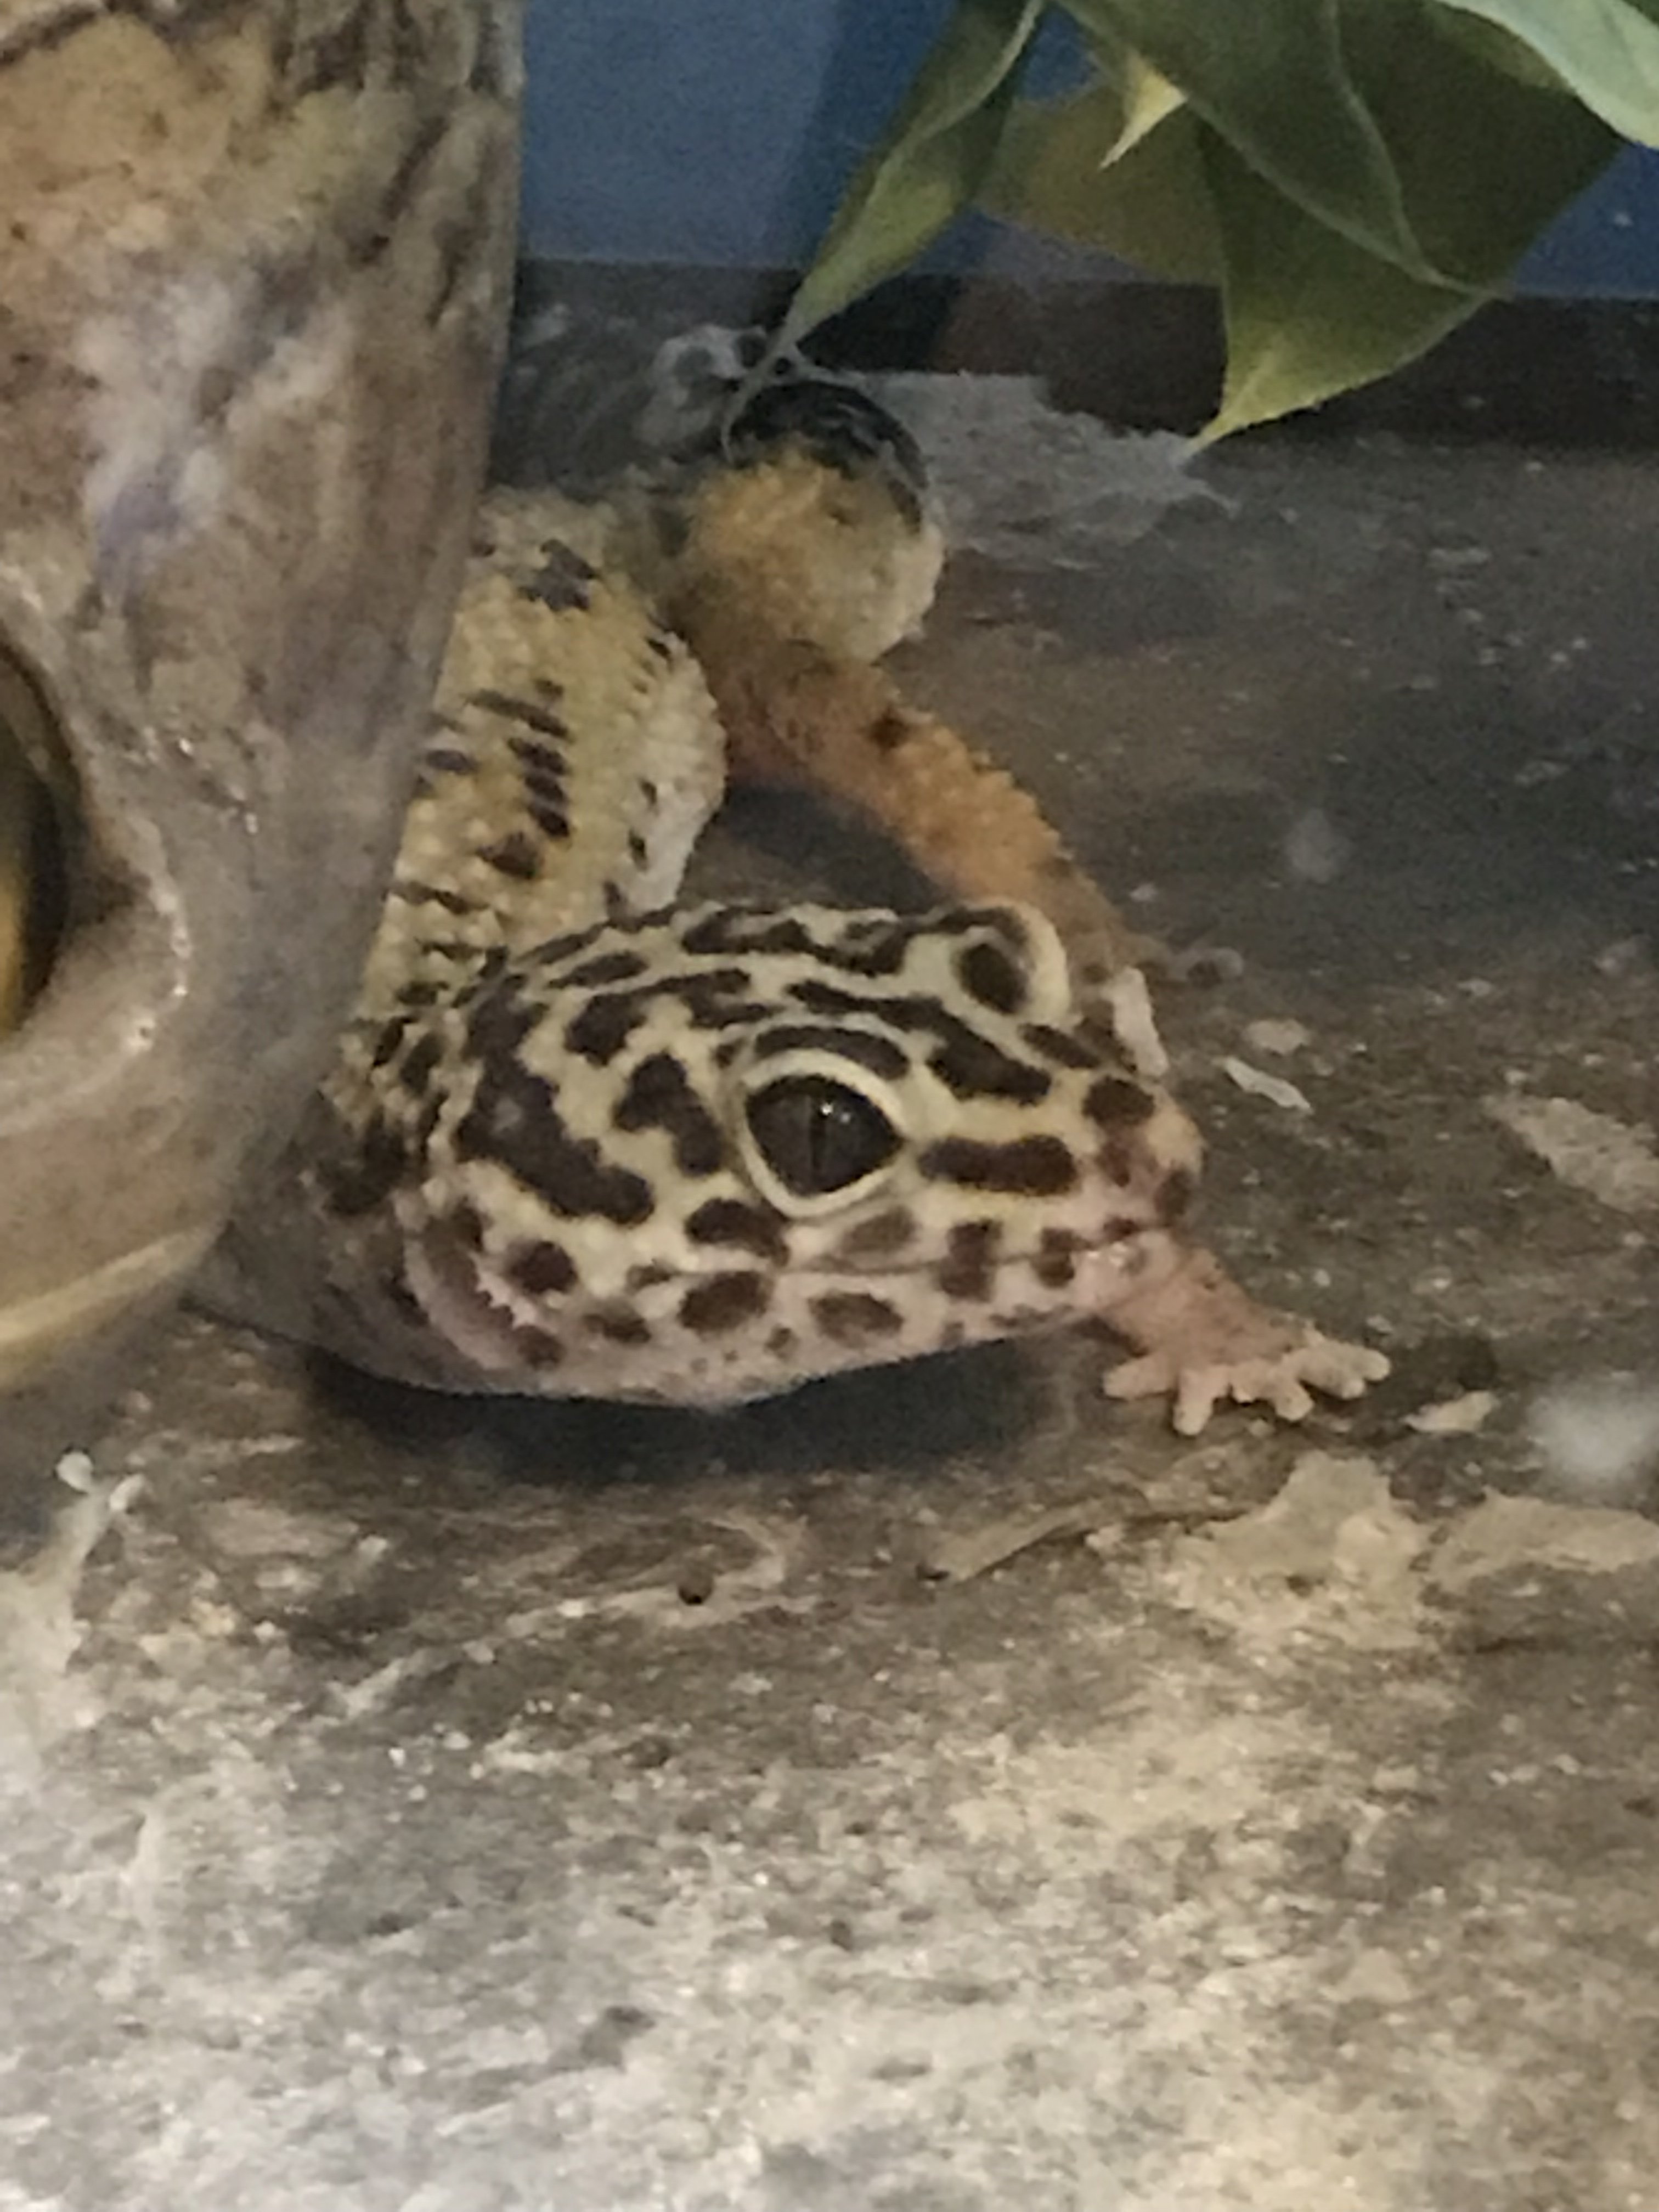 Kaymon the Leopard Gecko